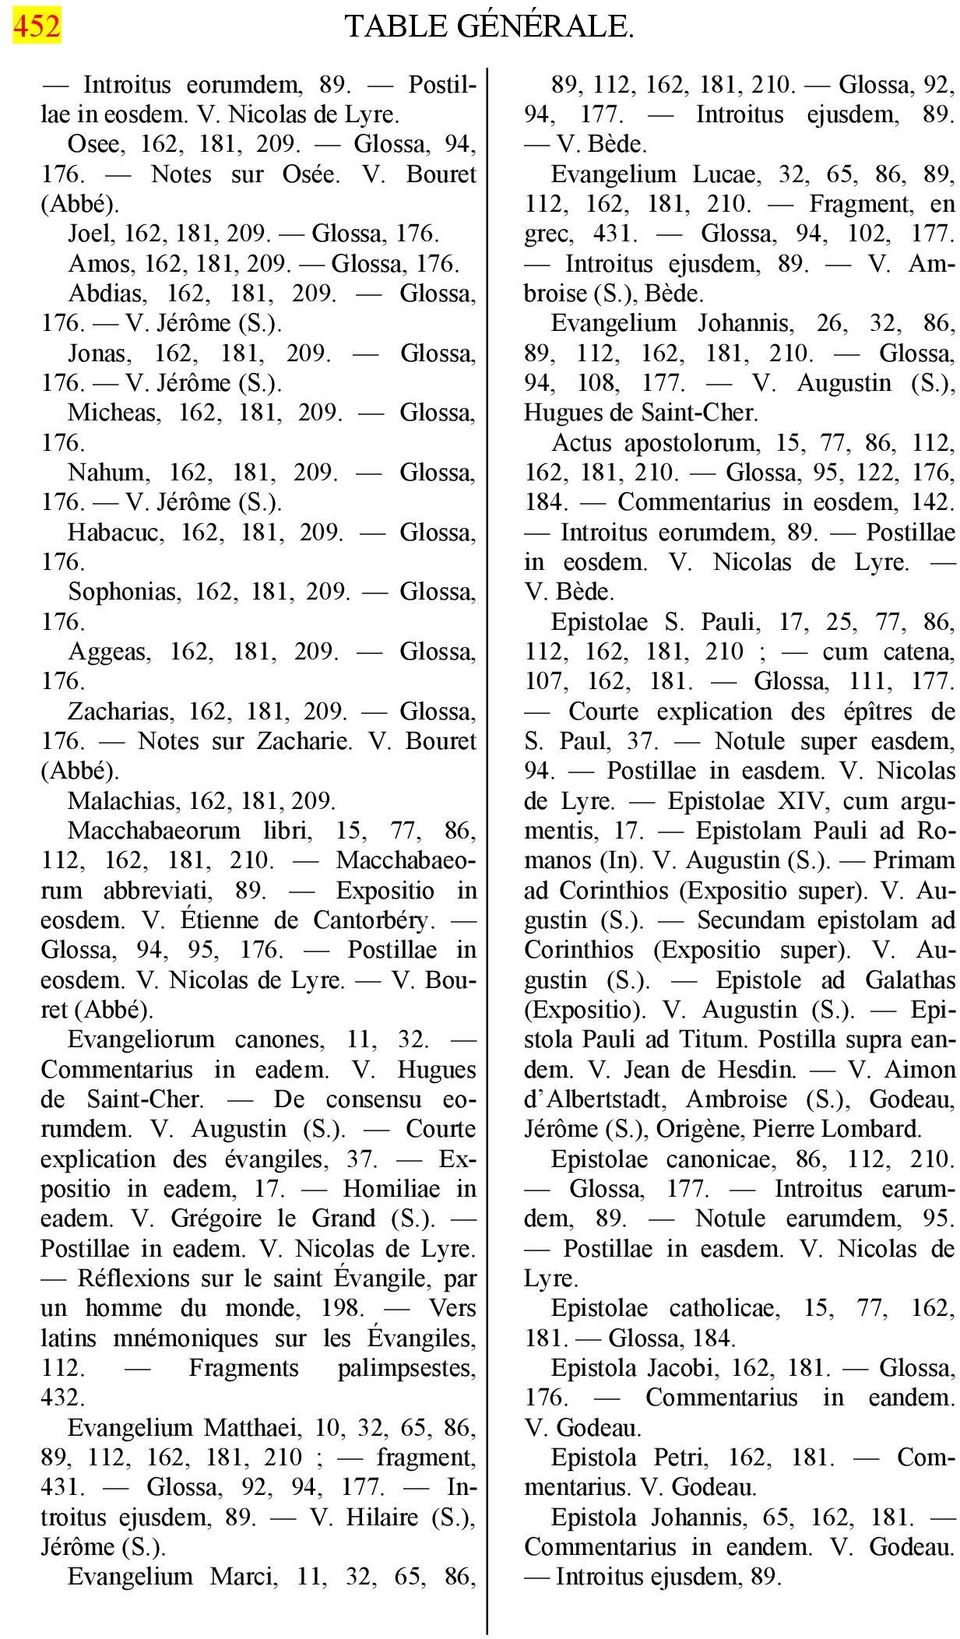 Glossa, 176. V. Jérôme (S.). Habacuc, 162, 181, 209. Glossa, 176. Sophonias, 162, 181, 209. Glossa, 176. Aggeas, 162, 181, 209. Glossa, 176. Zacharias, 162, 181, 209. Glossa, 176. Notes sur Zacharie.